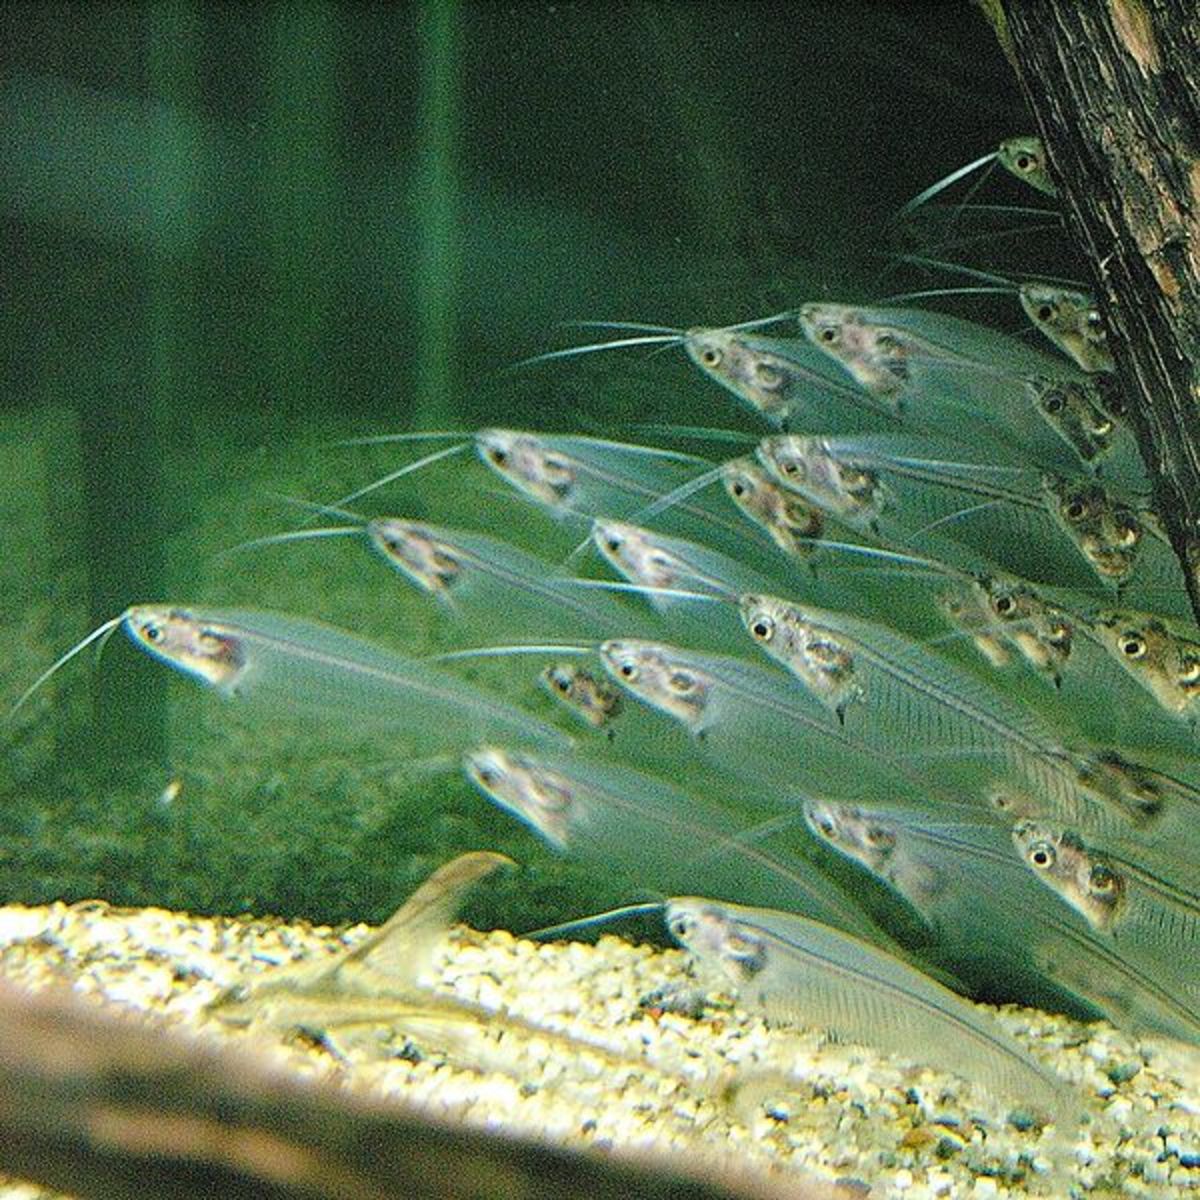 Glass Catfish (Kryptopterus species) in Himeji City Aquarium, Japan. Copyright OpenCage.